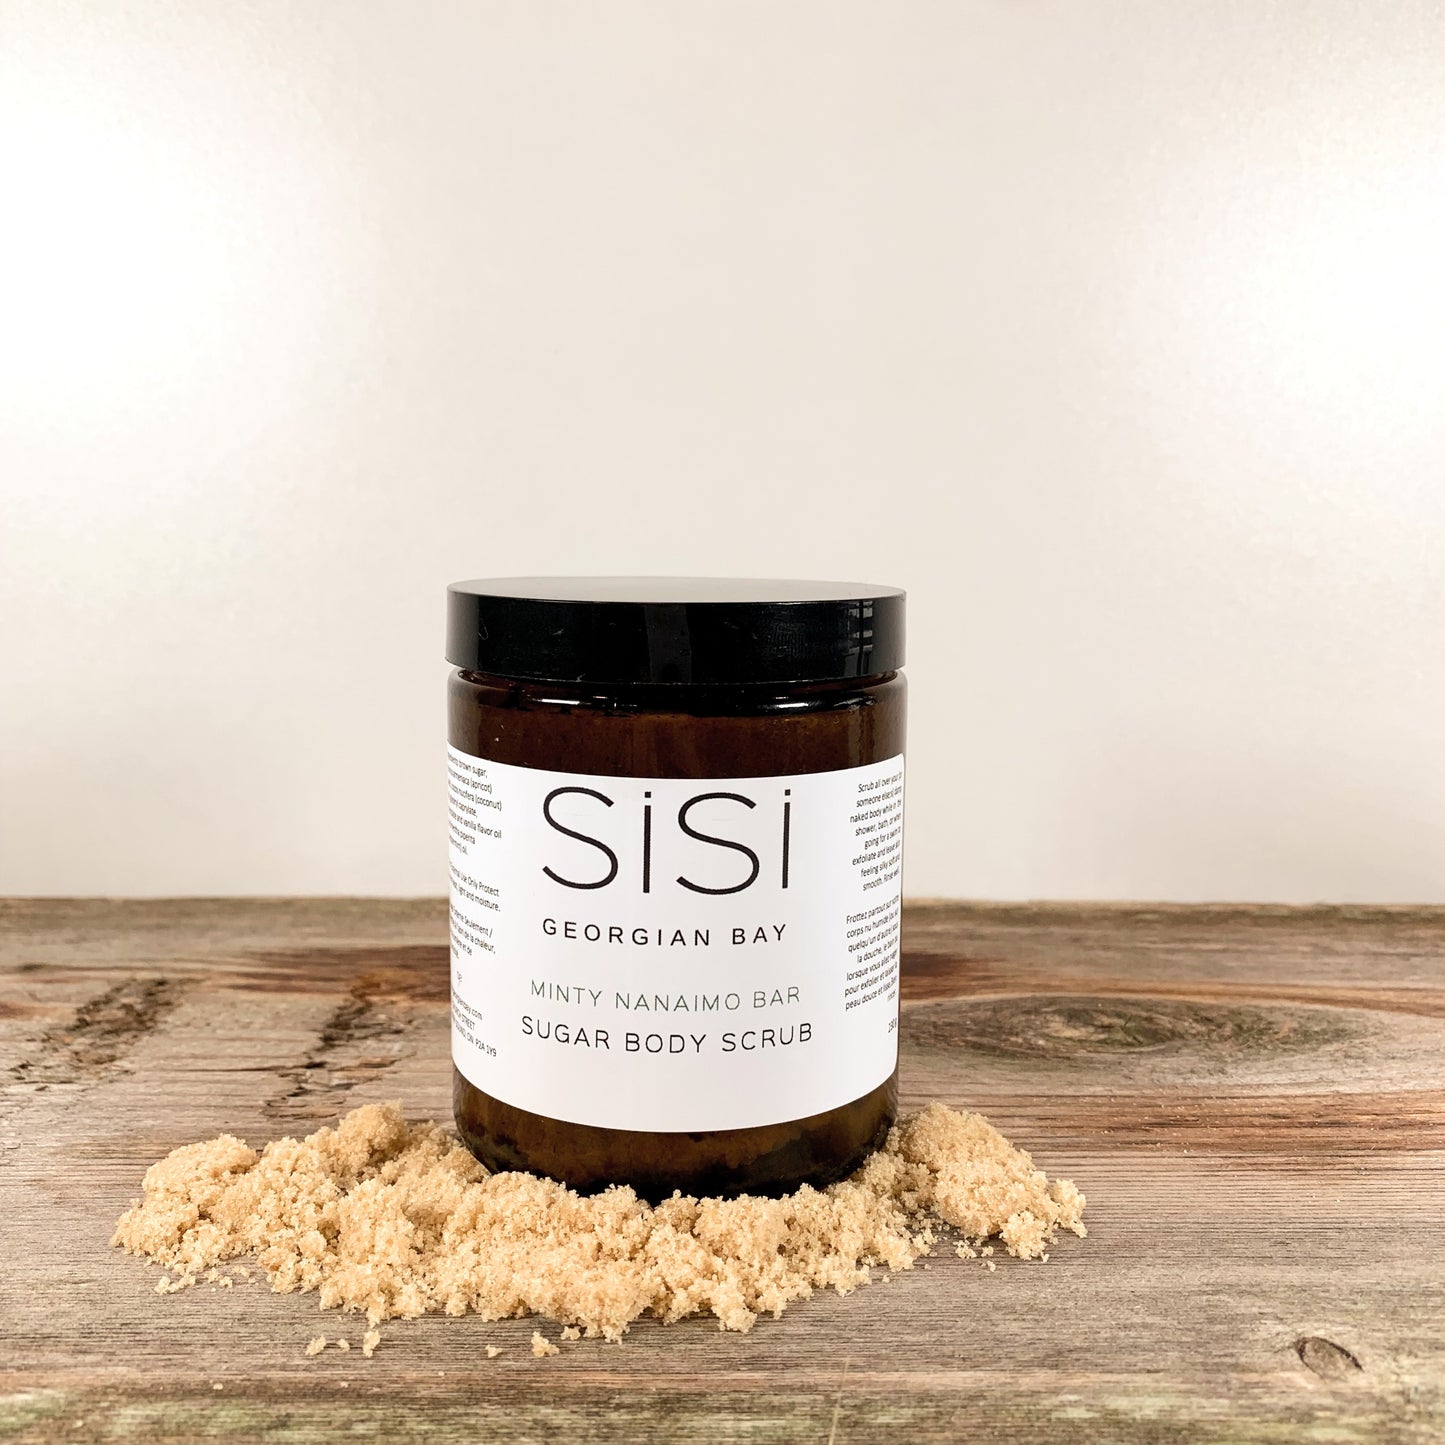 A jar of SiSi Georgian Bay Minty nanaimo bar sugar body scrub on a wooden counter with brown sugar around it